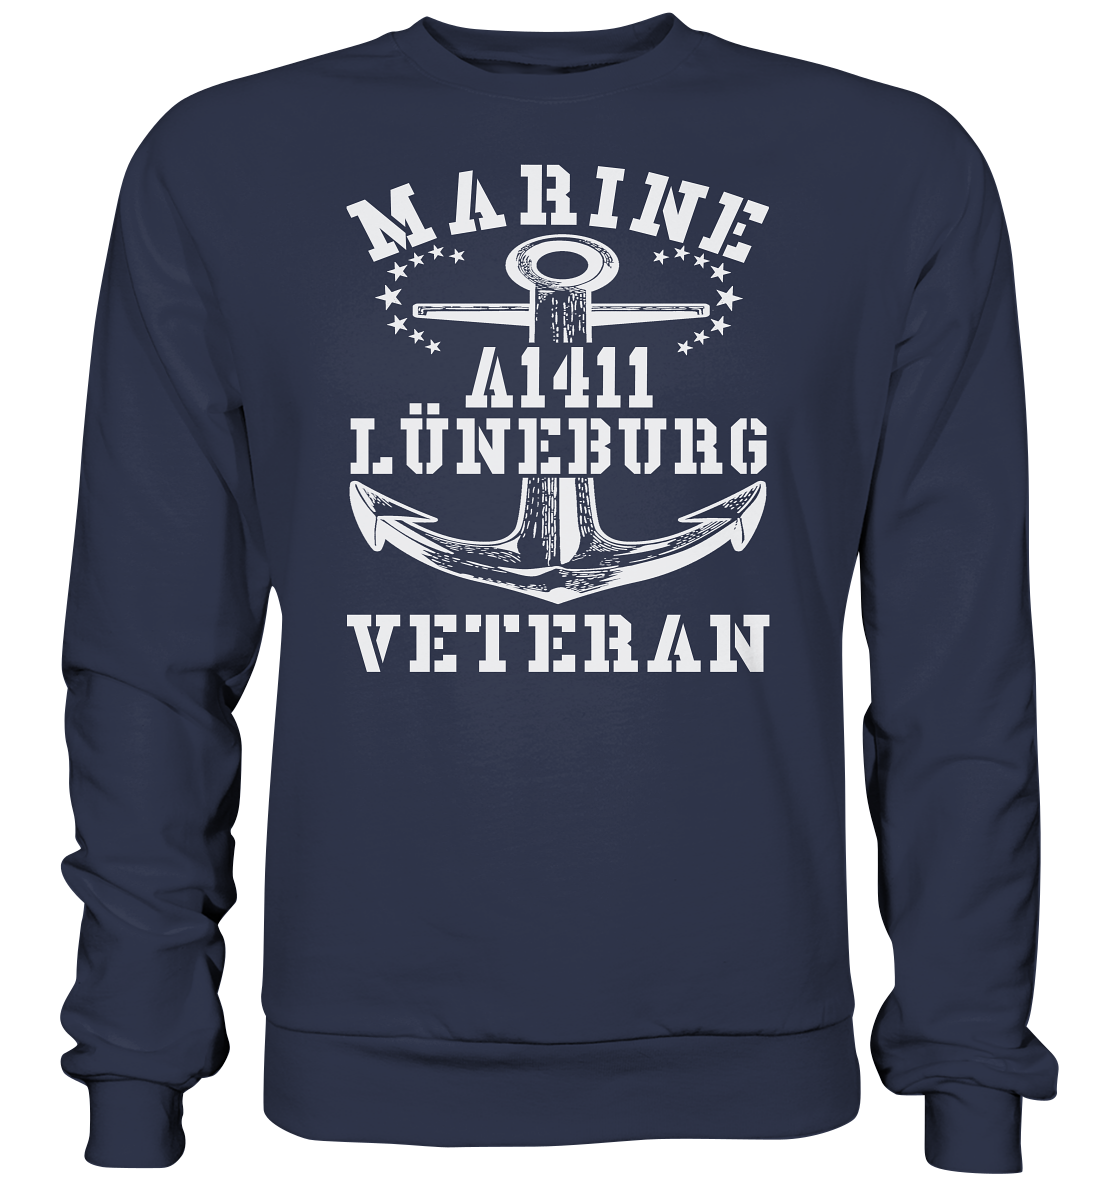 Troßschiff A1411 LÜNEBURG Marine Veteran - Premium Sweatshirt